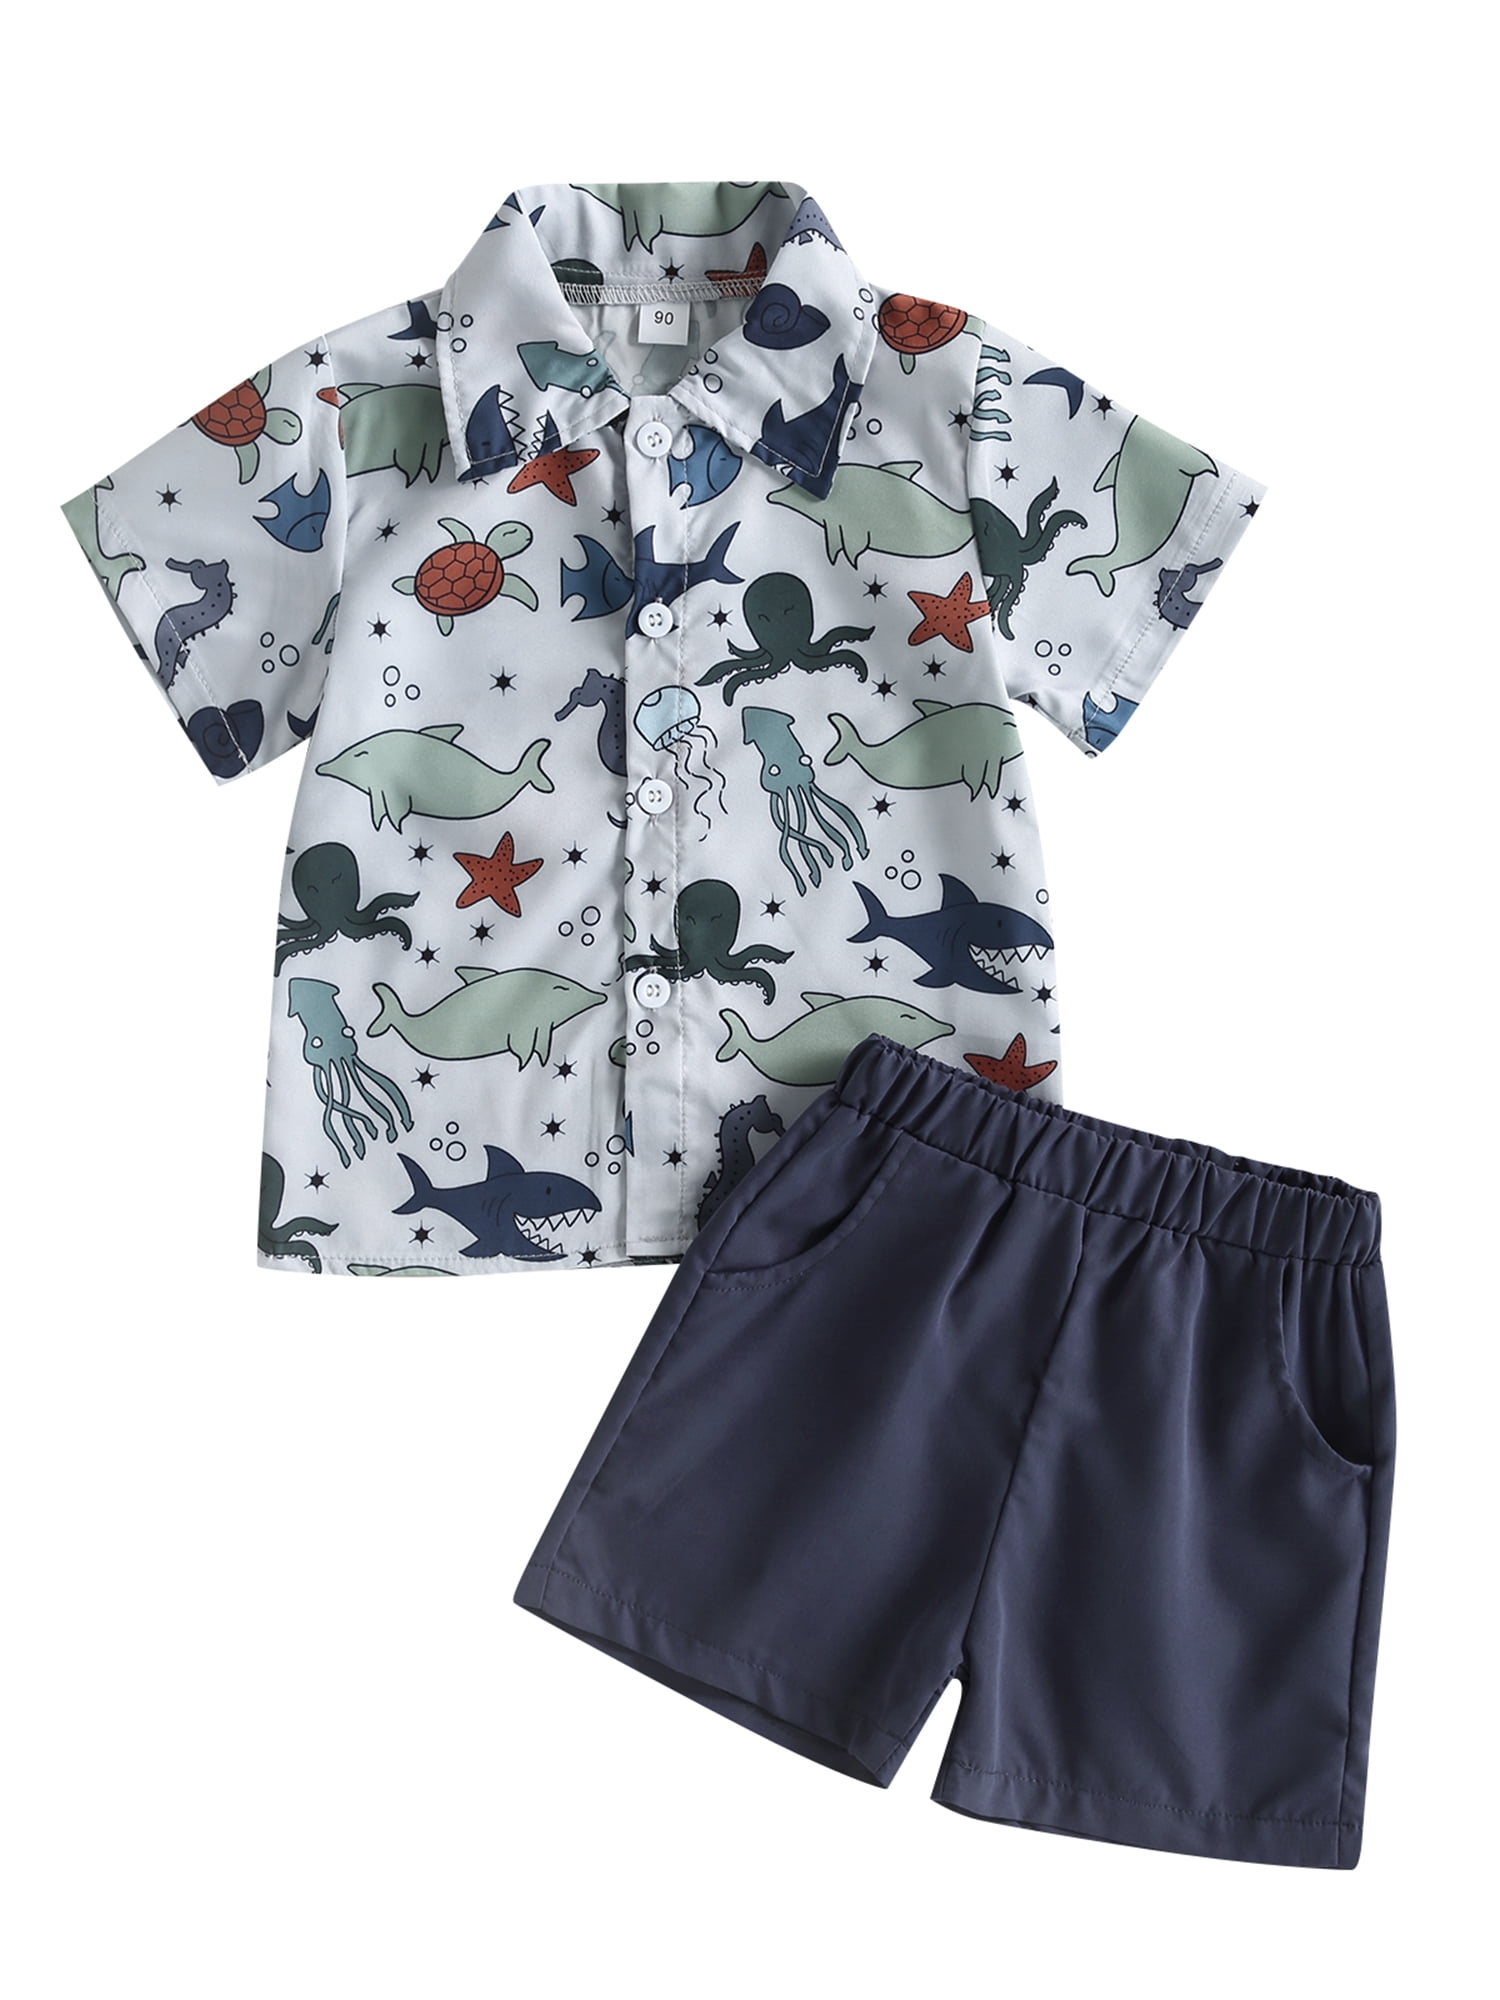 Qtinghua Toddler Baby Boy Summer Outfits Cartoon Fish Print Short Sleeve  Button Down Shirts Tops Shorts 2Pcs Clothes